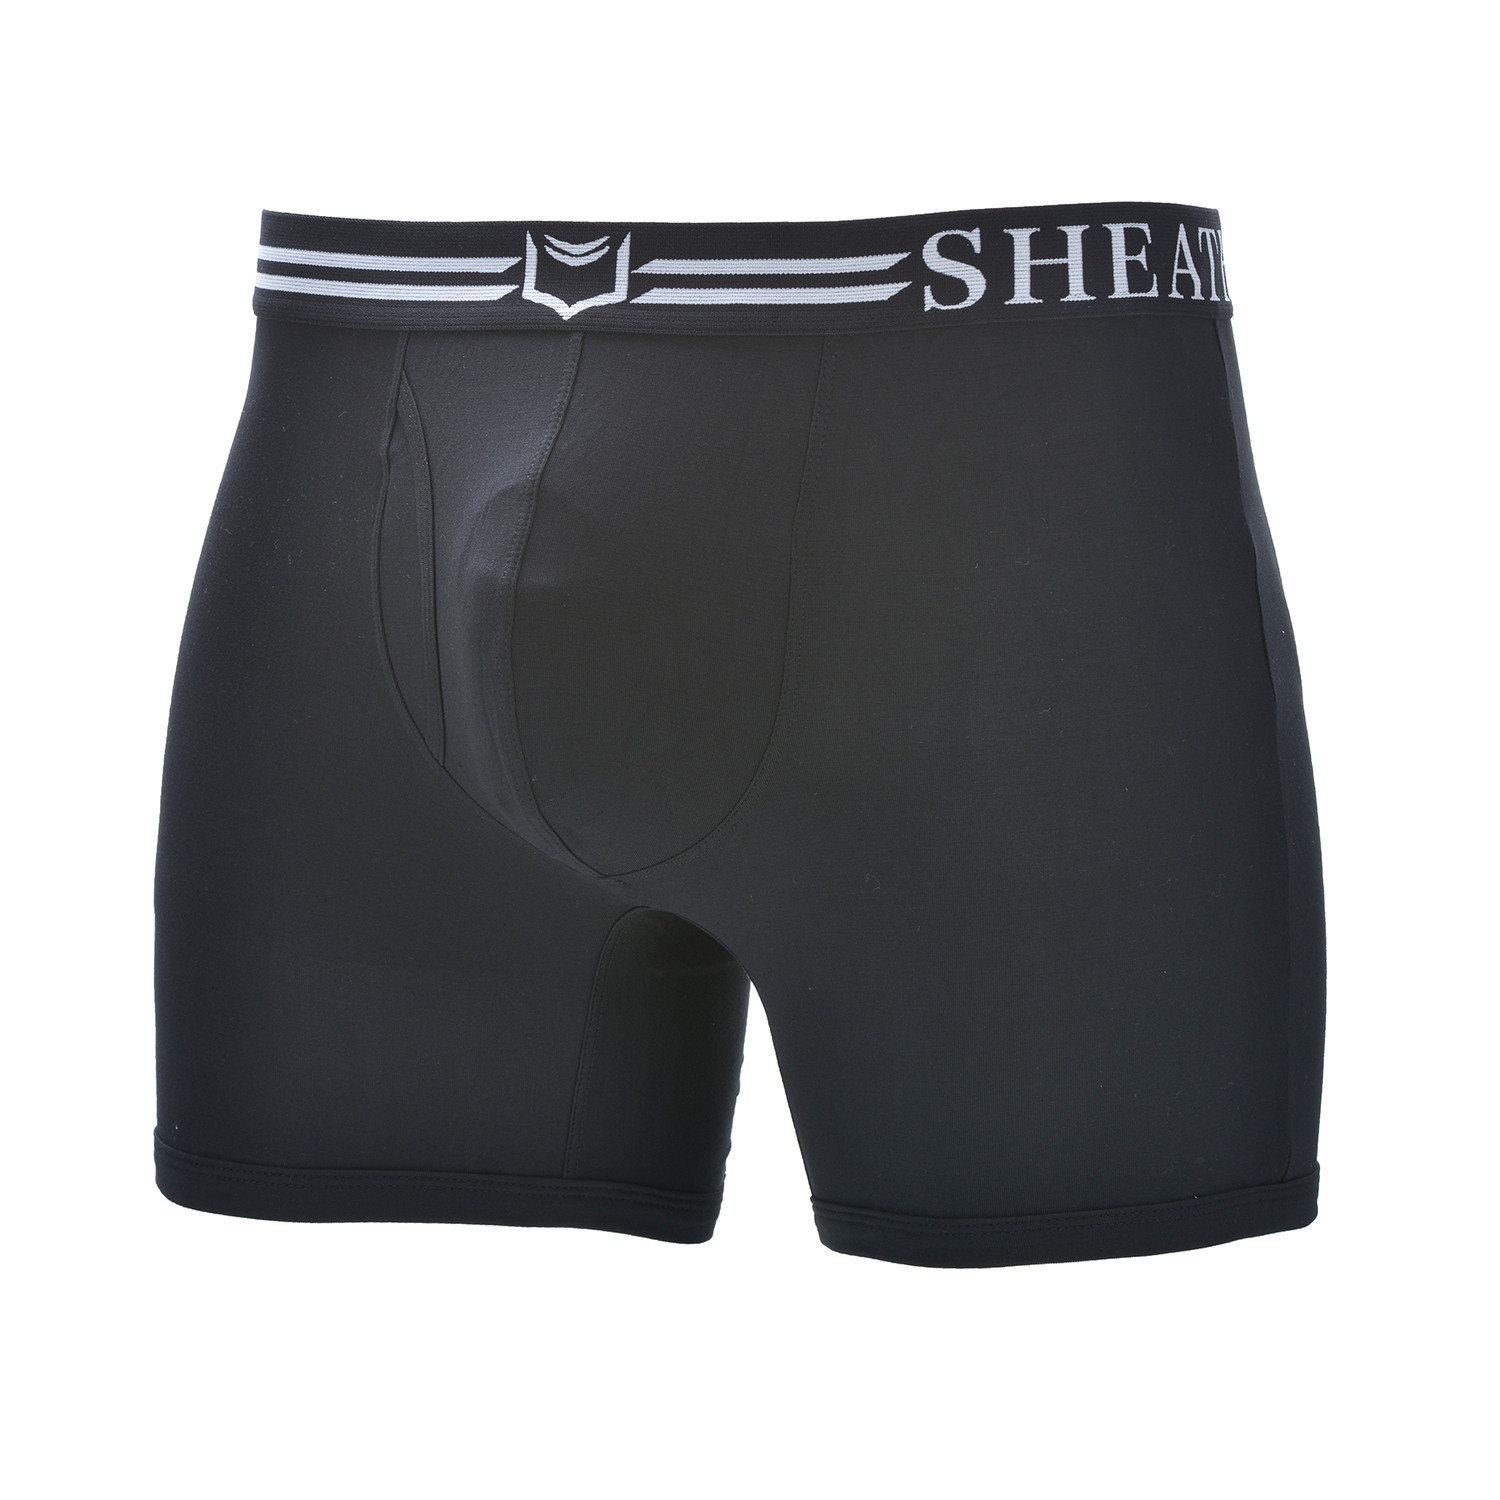 SHEATH 4.0 Men's Dual Pouch Boxer Brief // Black (Small) - Sheath Underwear  - Touch of Modern